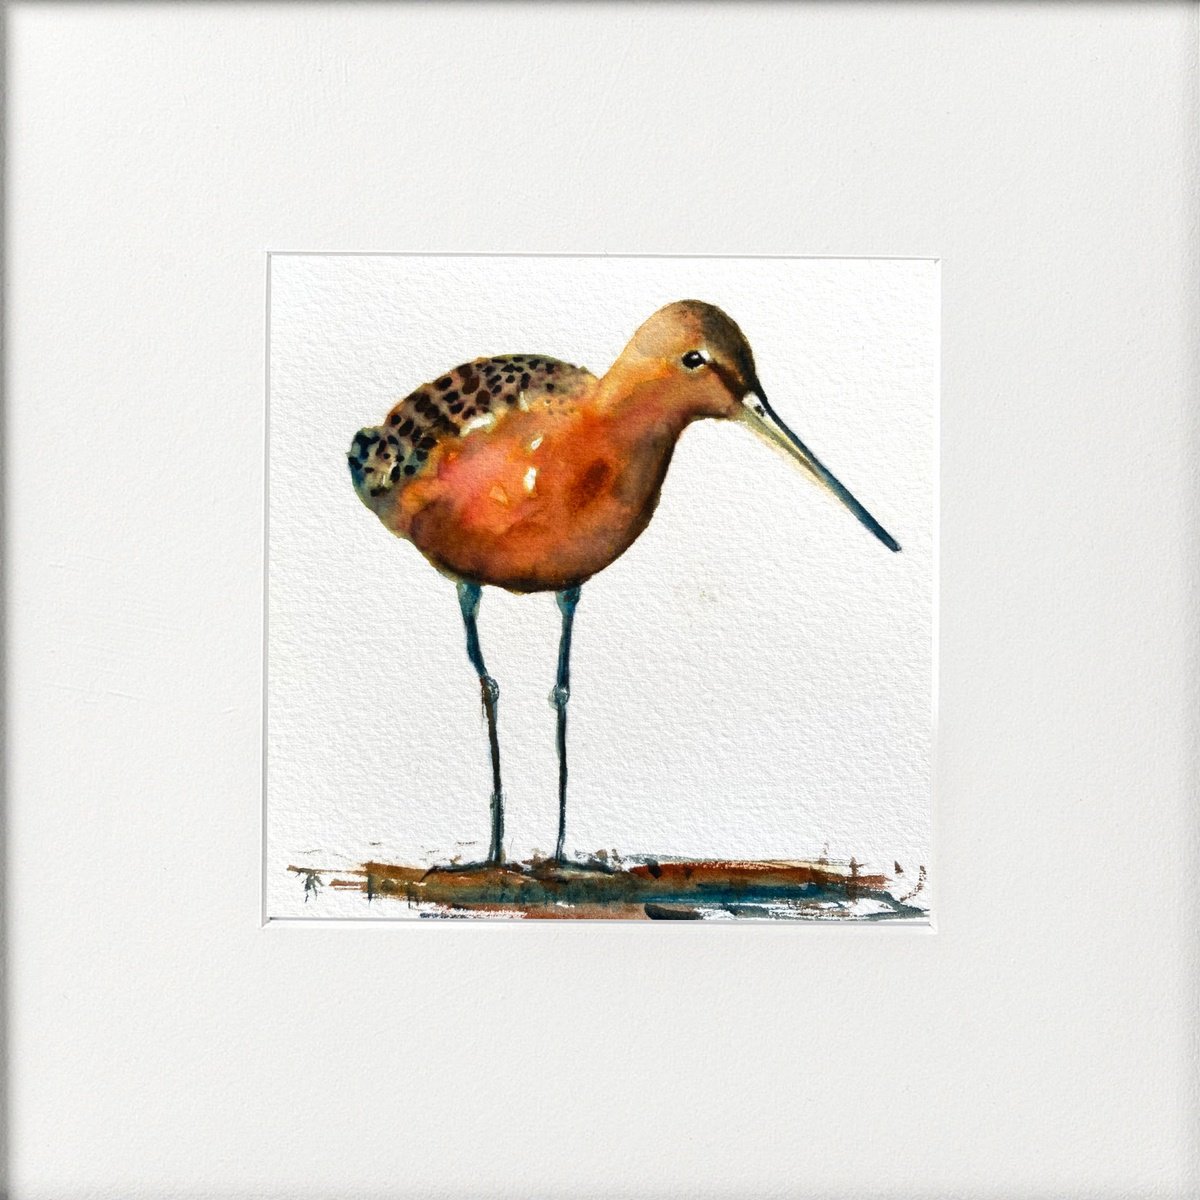 Wading Bird 1 by Teresa Tanner